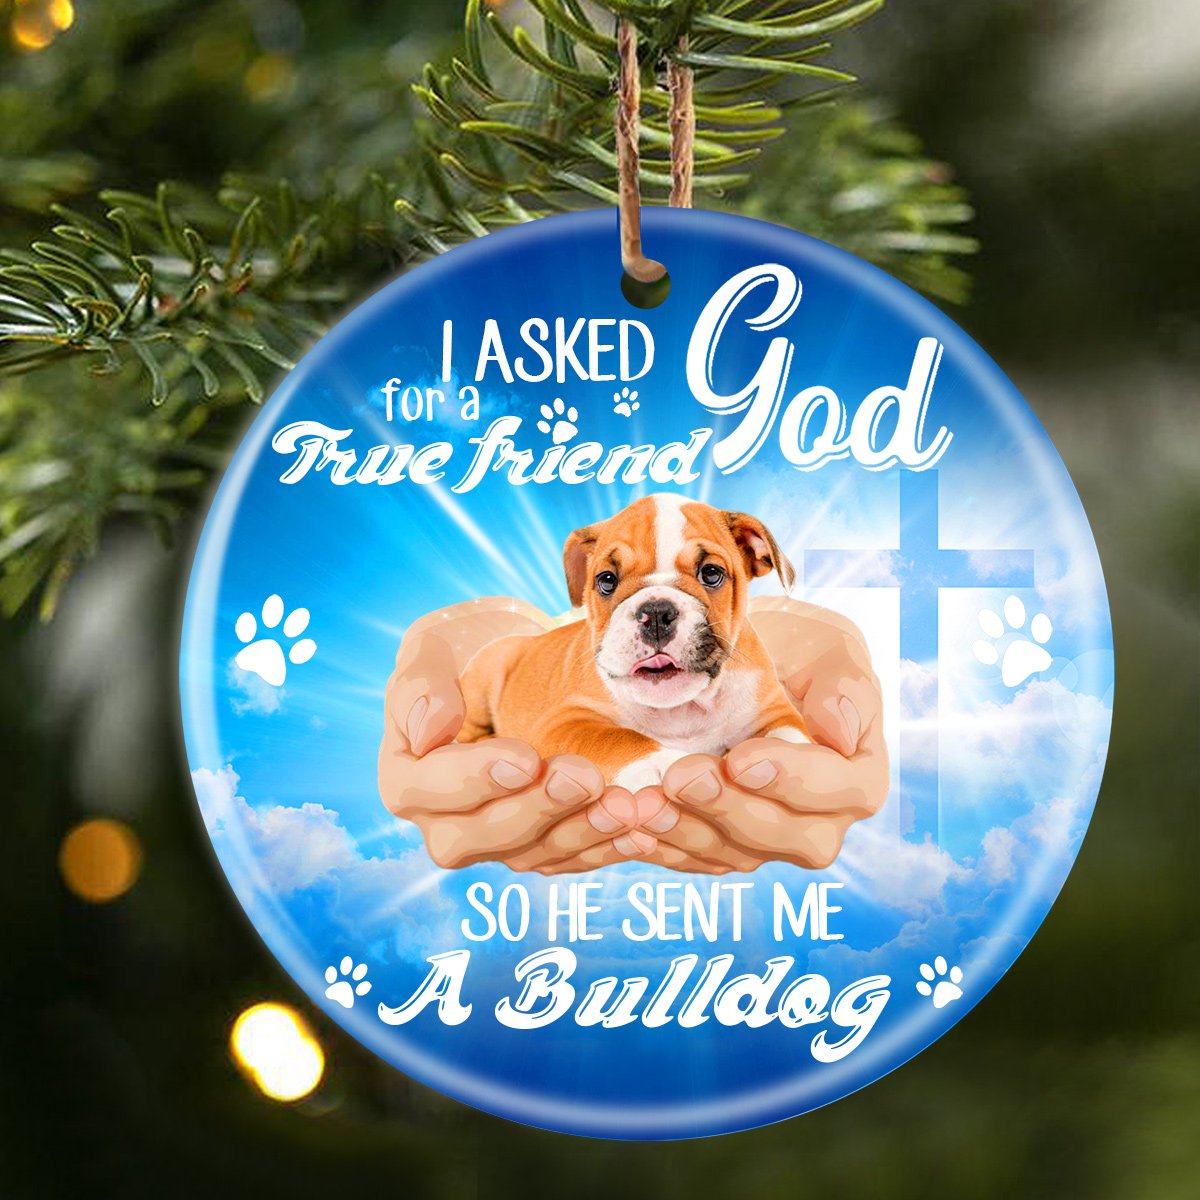 God Send Me A/An Bulldog Porcelain/Ceramic Ornament